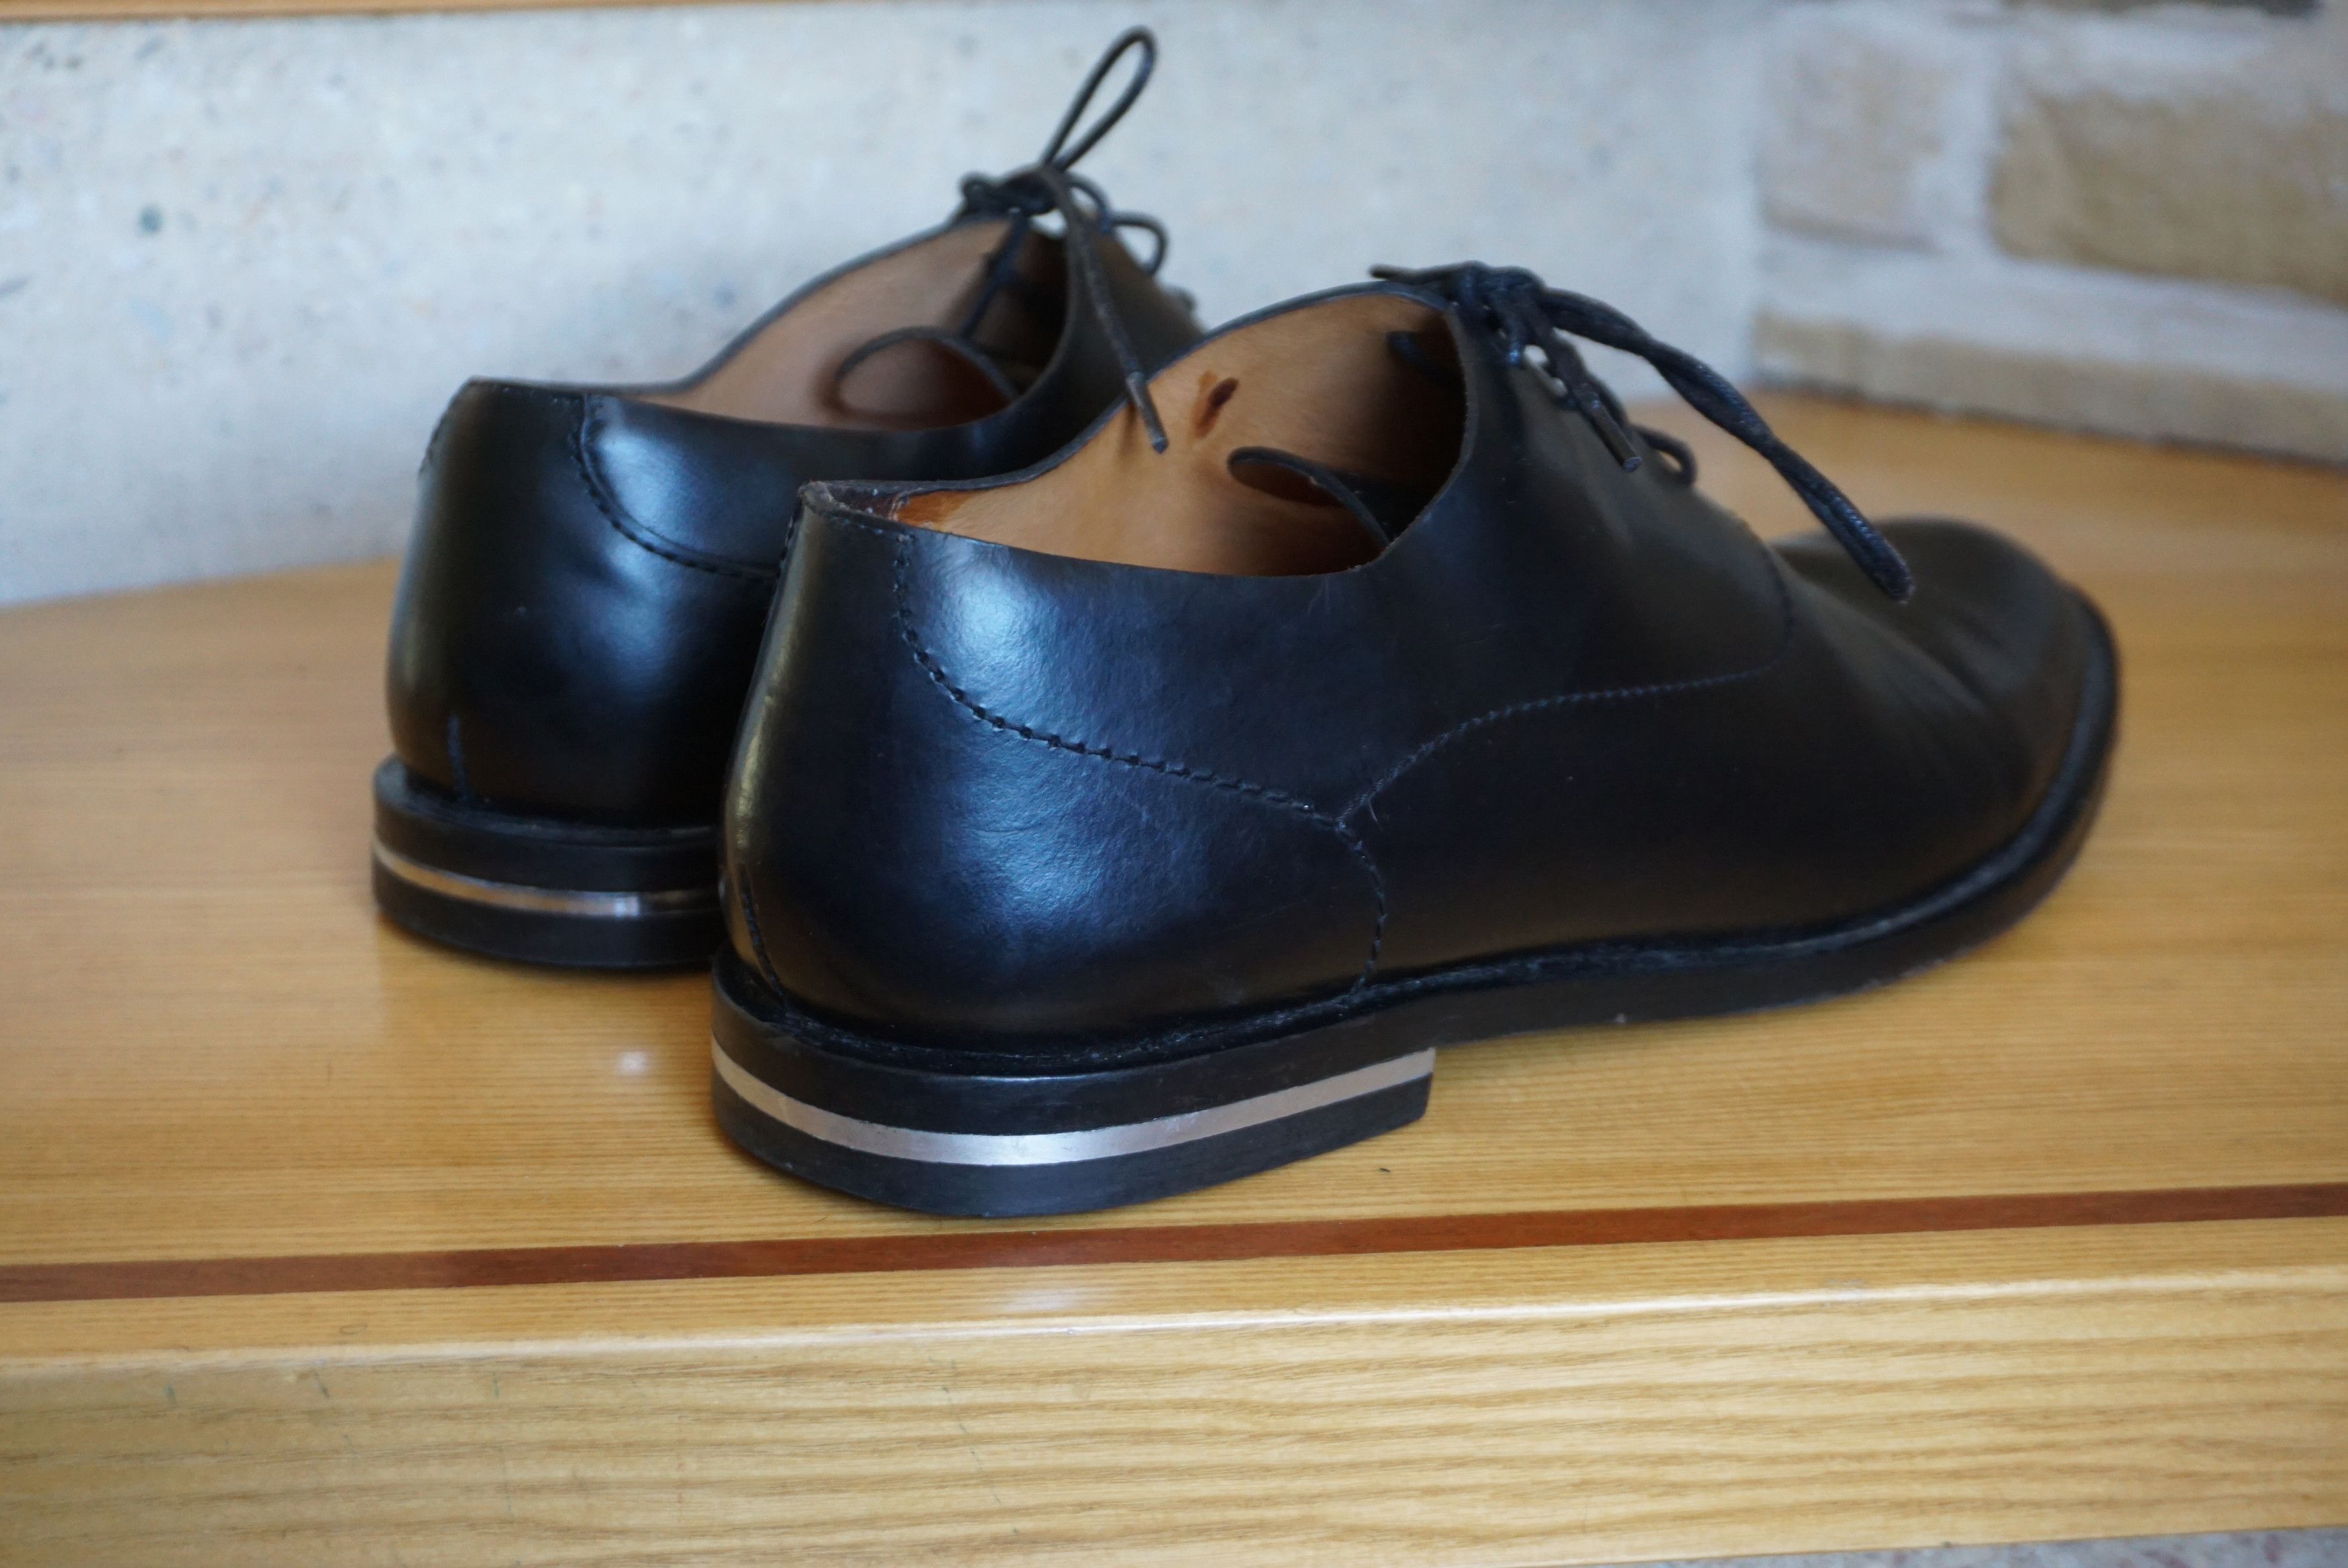 Cos COS RPR$250 leather office shoes EU44 black formal lace up Size US 10.5 / EU 43-44 - 8 Thumbnail